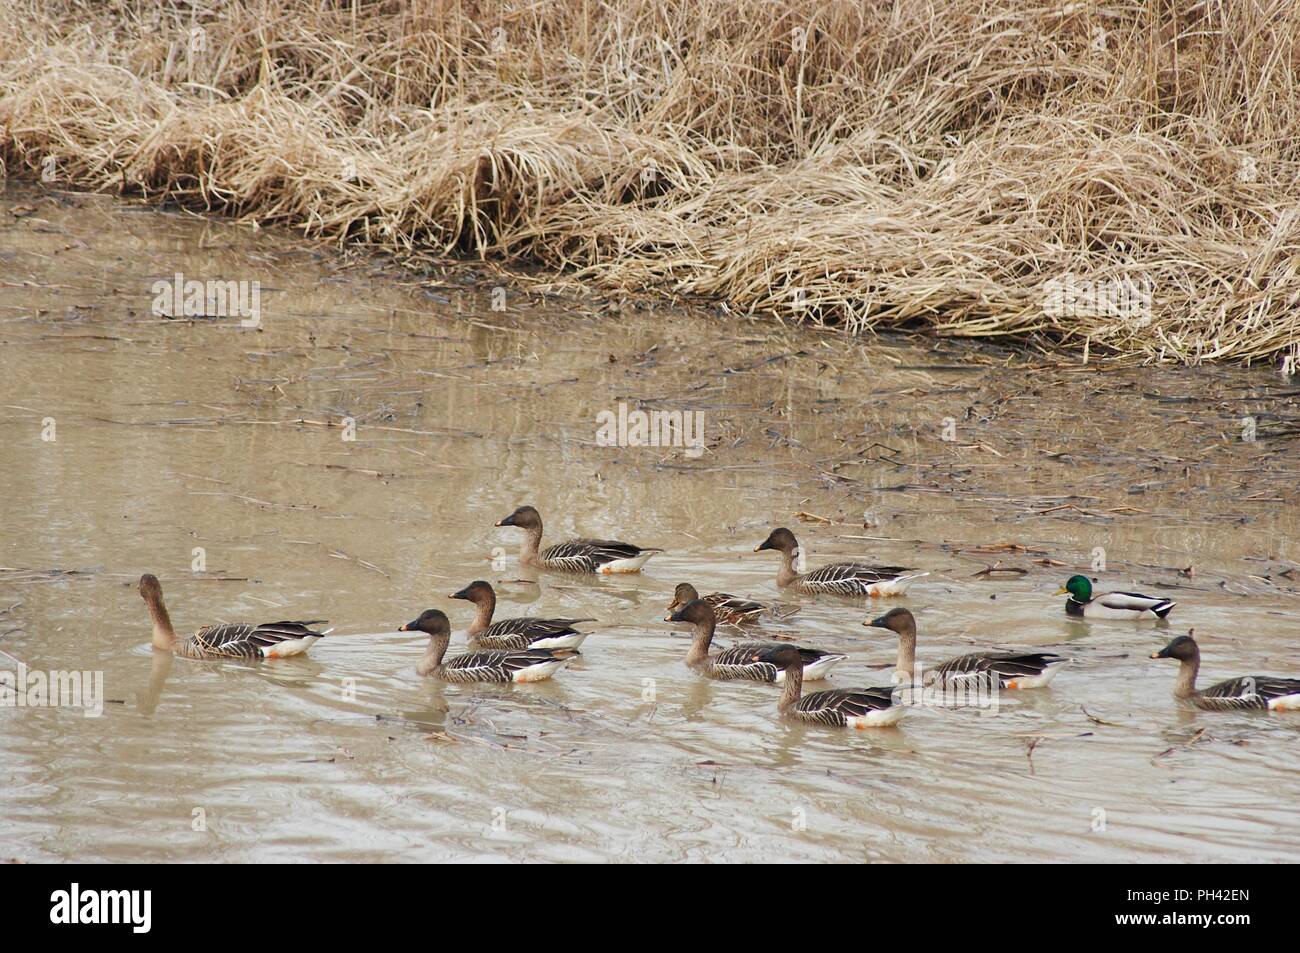 Group swimming of migrating birds in Junam reservoir, Korea Stock Photo